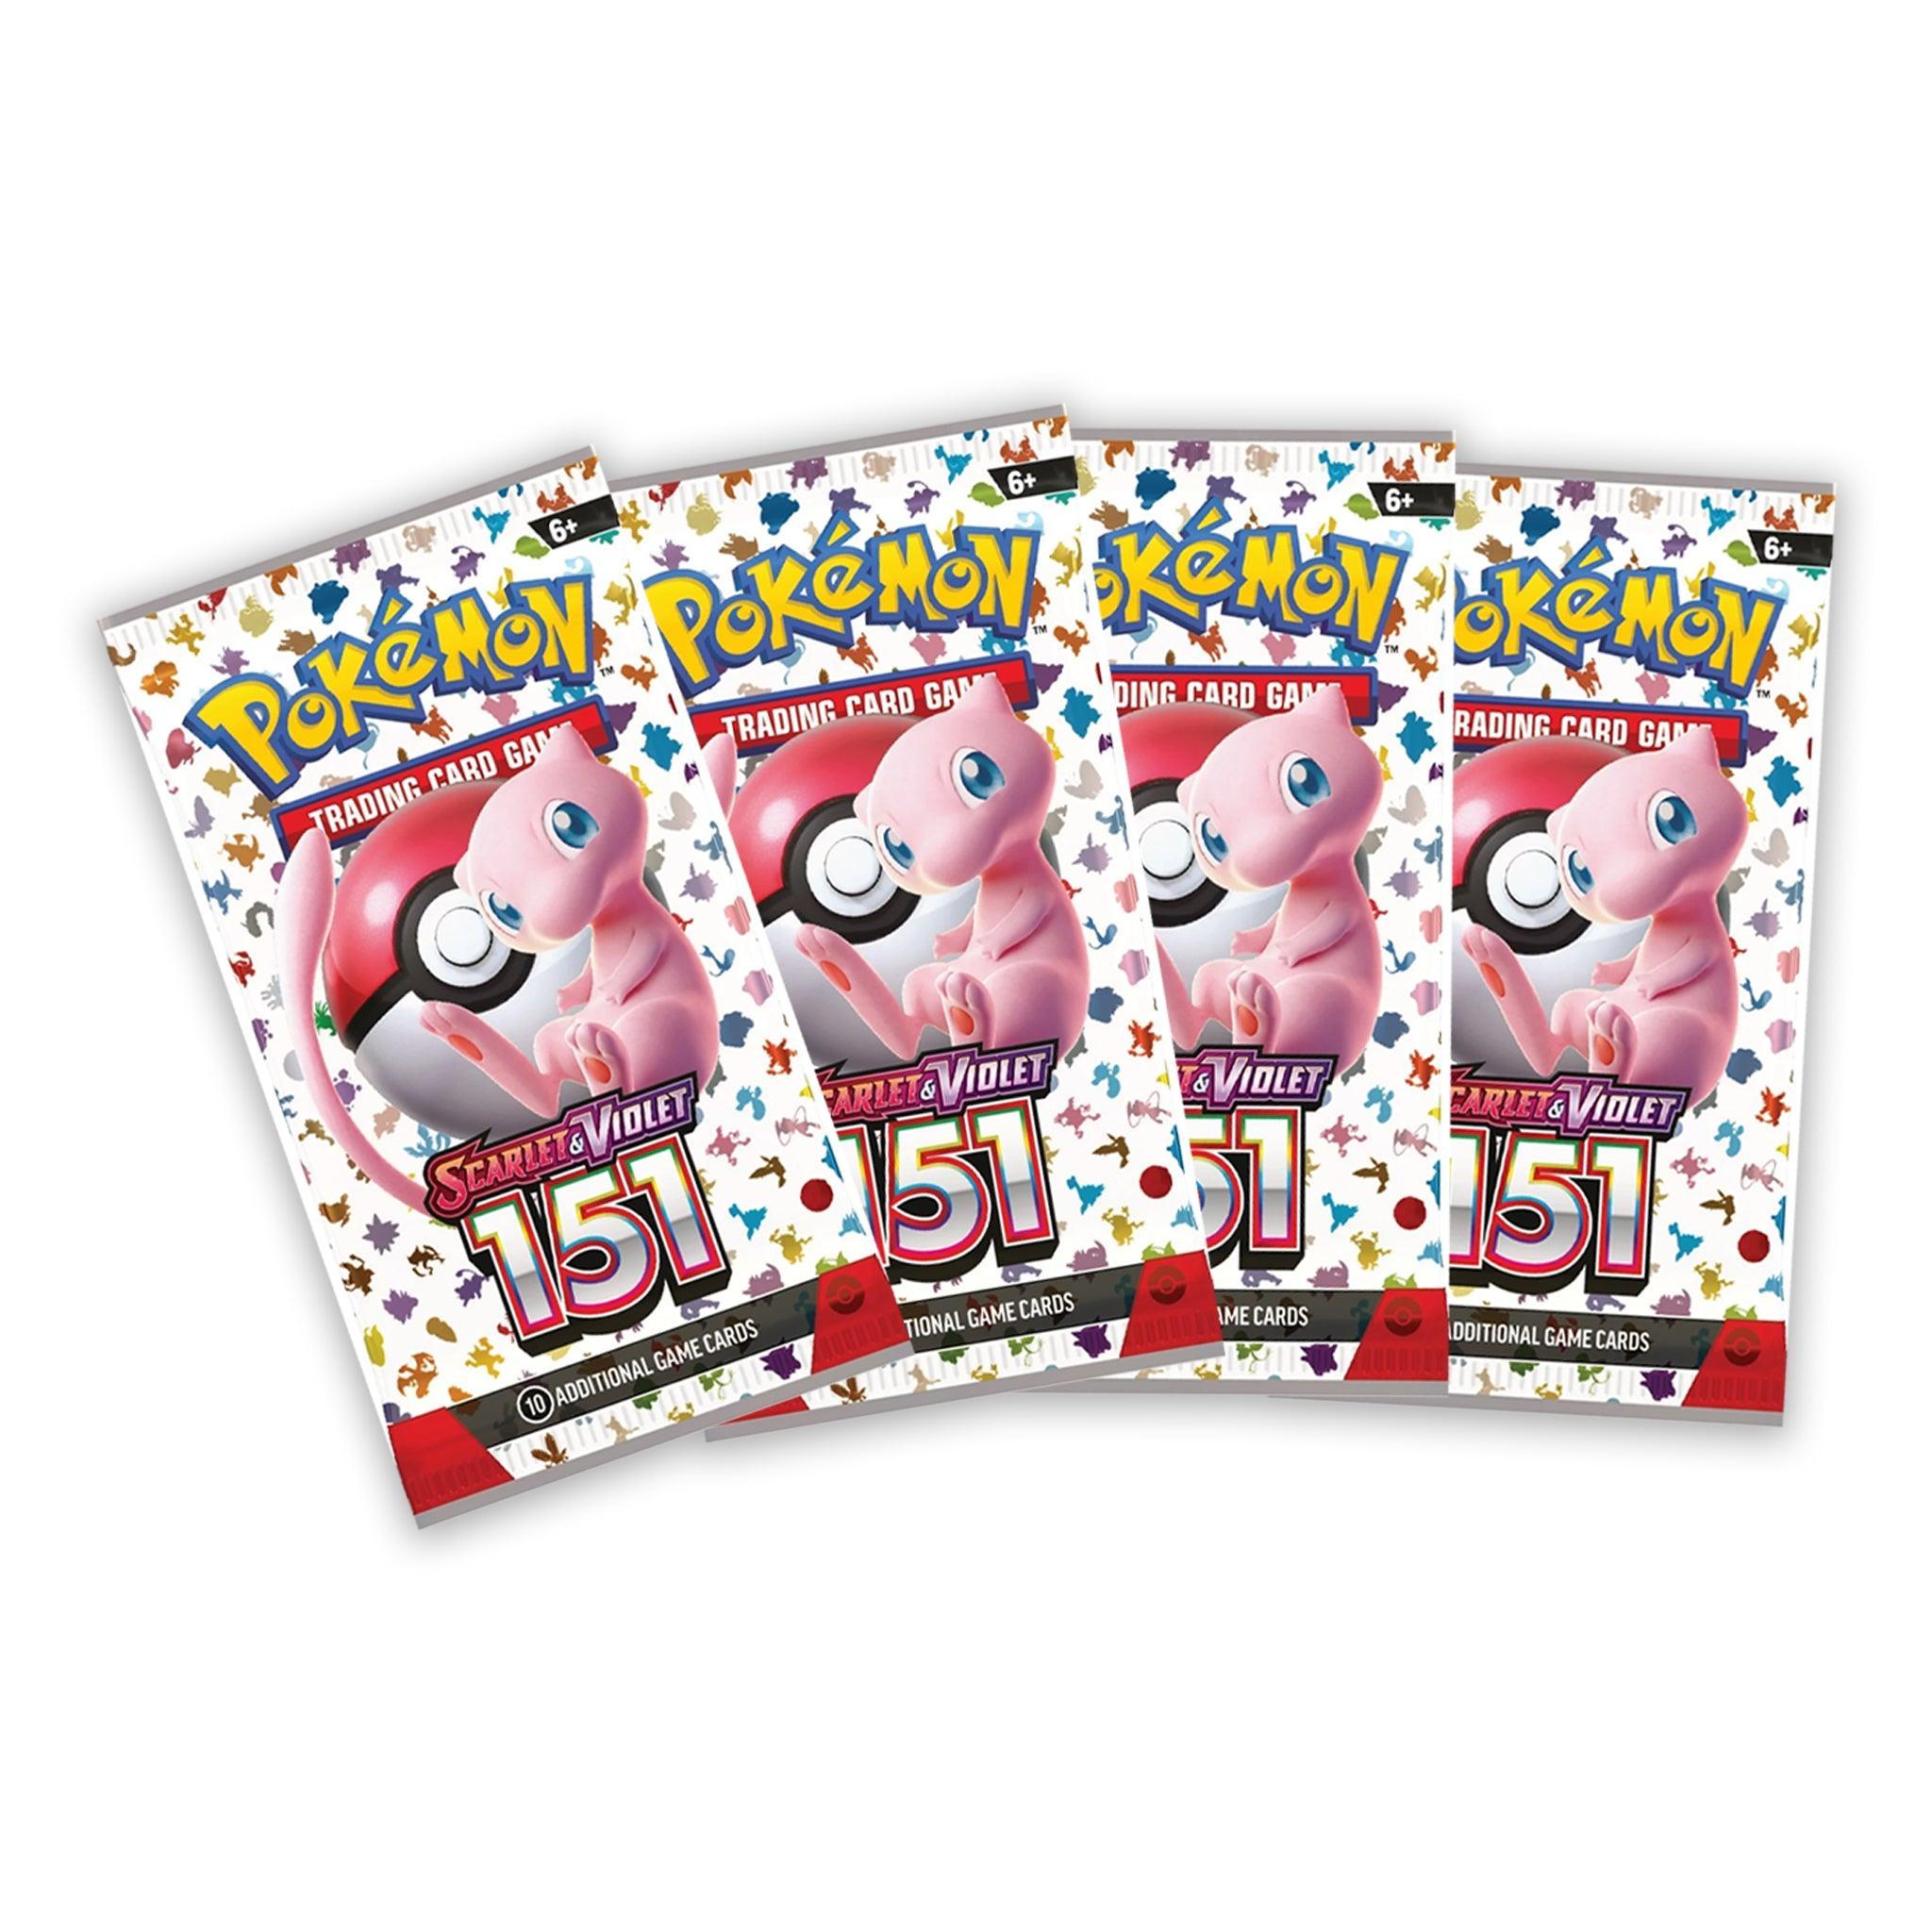 Pokémon TCG: Scarlet & Violet: 151 - Zapdos ex Box